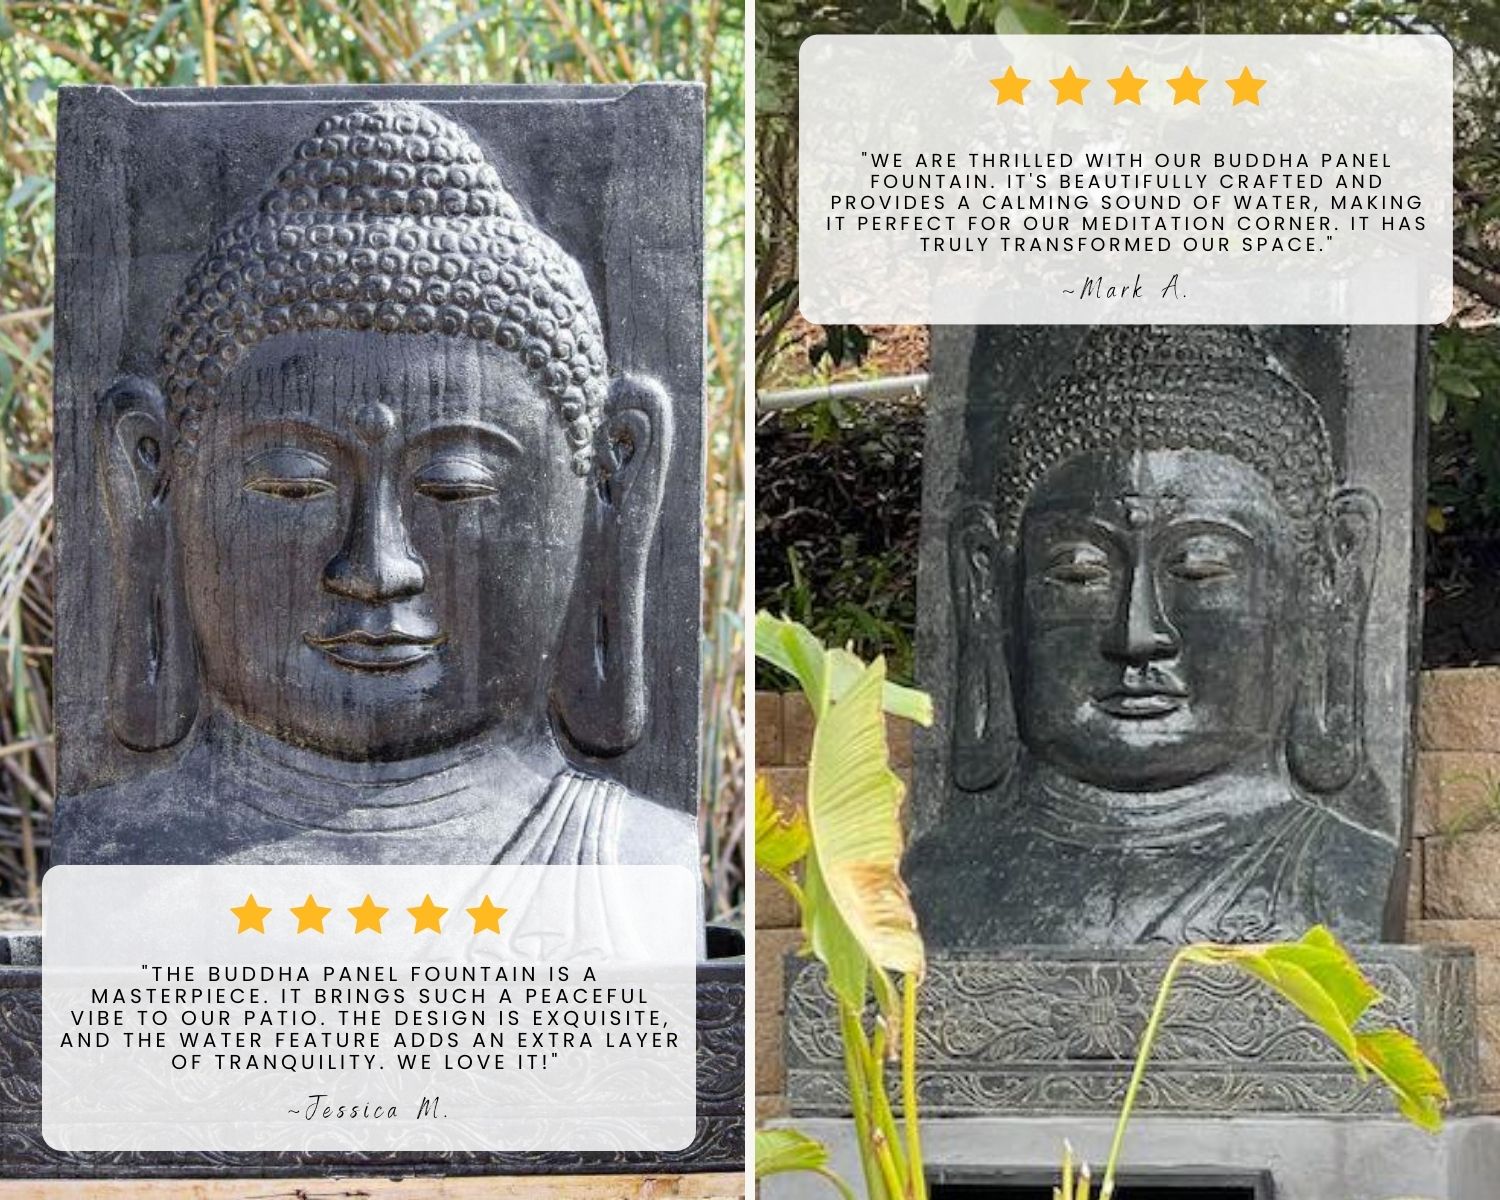 Customer photos of Large Buddha Face Panel Fountain